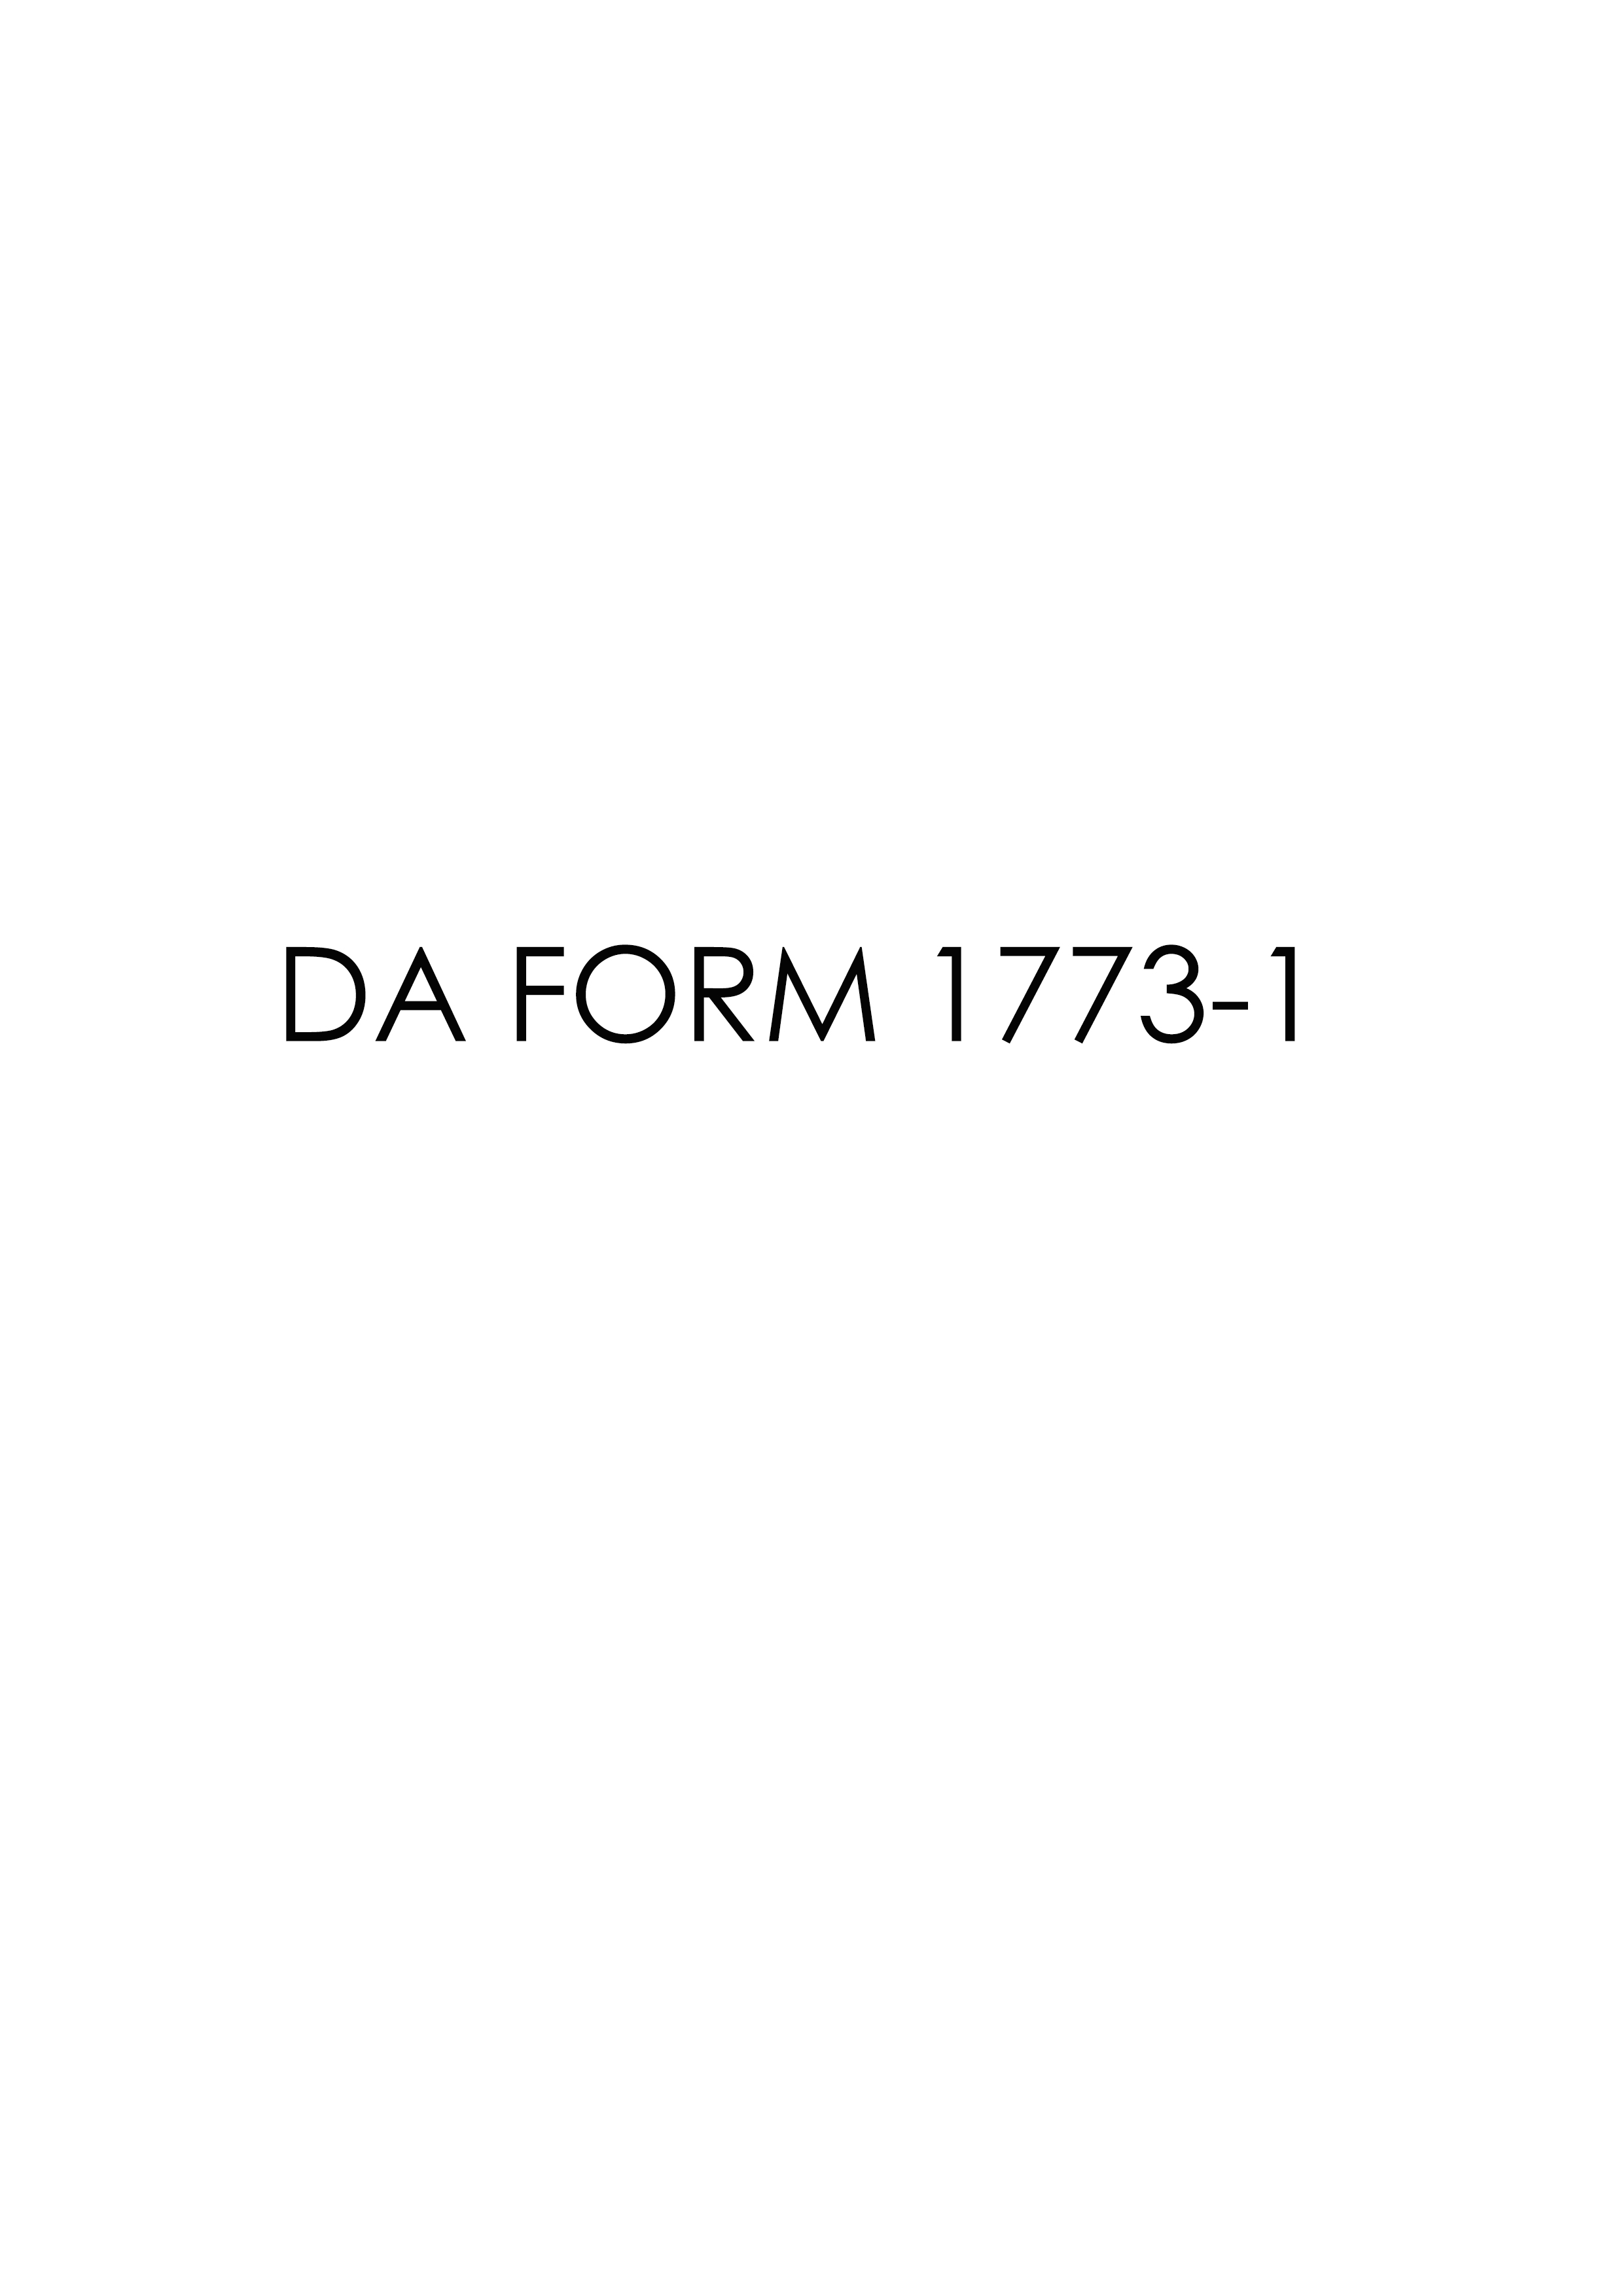 da Form 1773-1 fillable